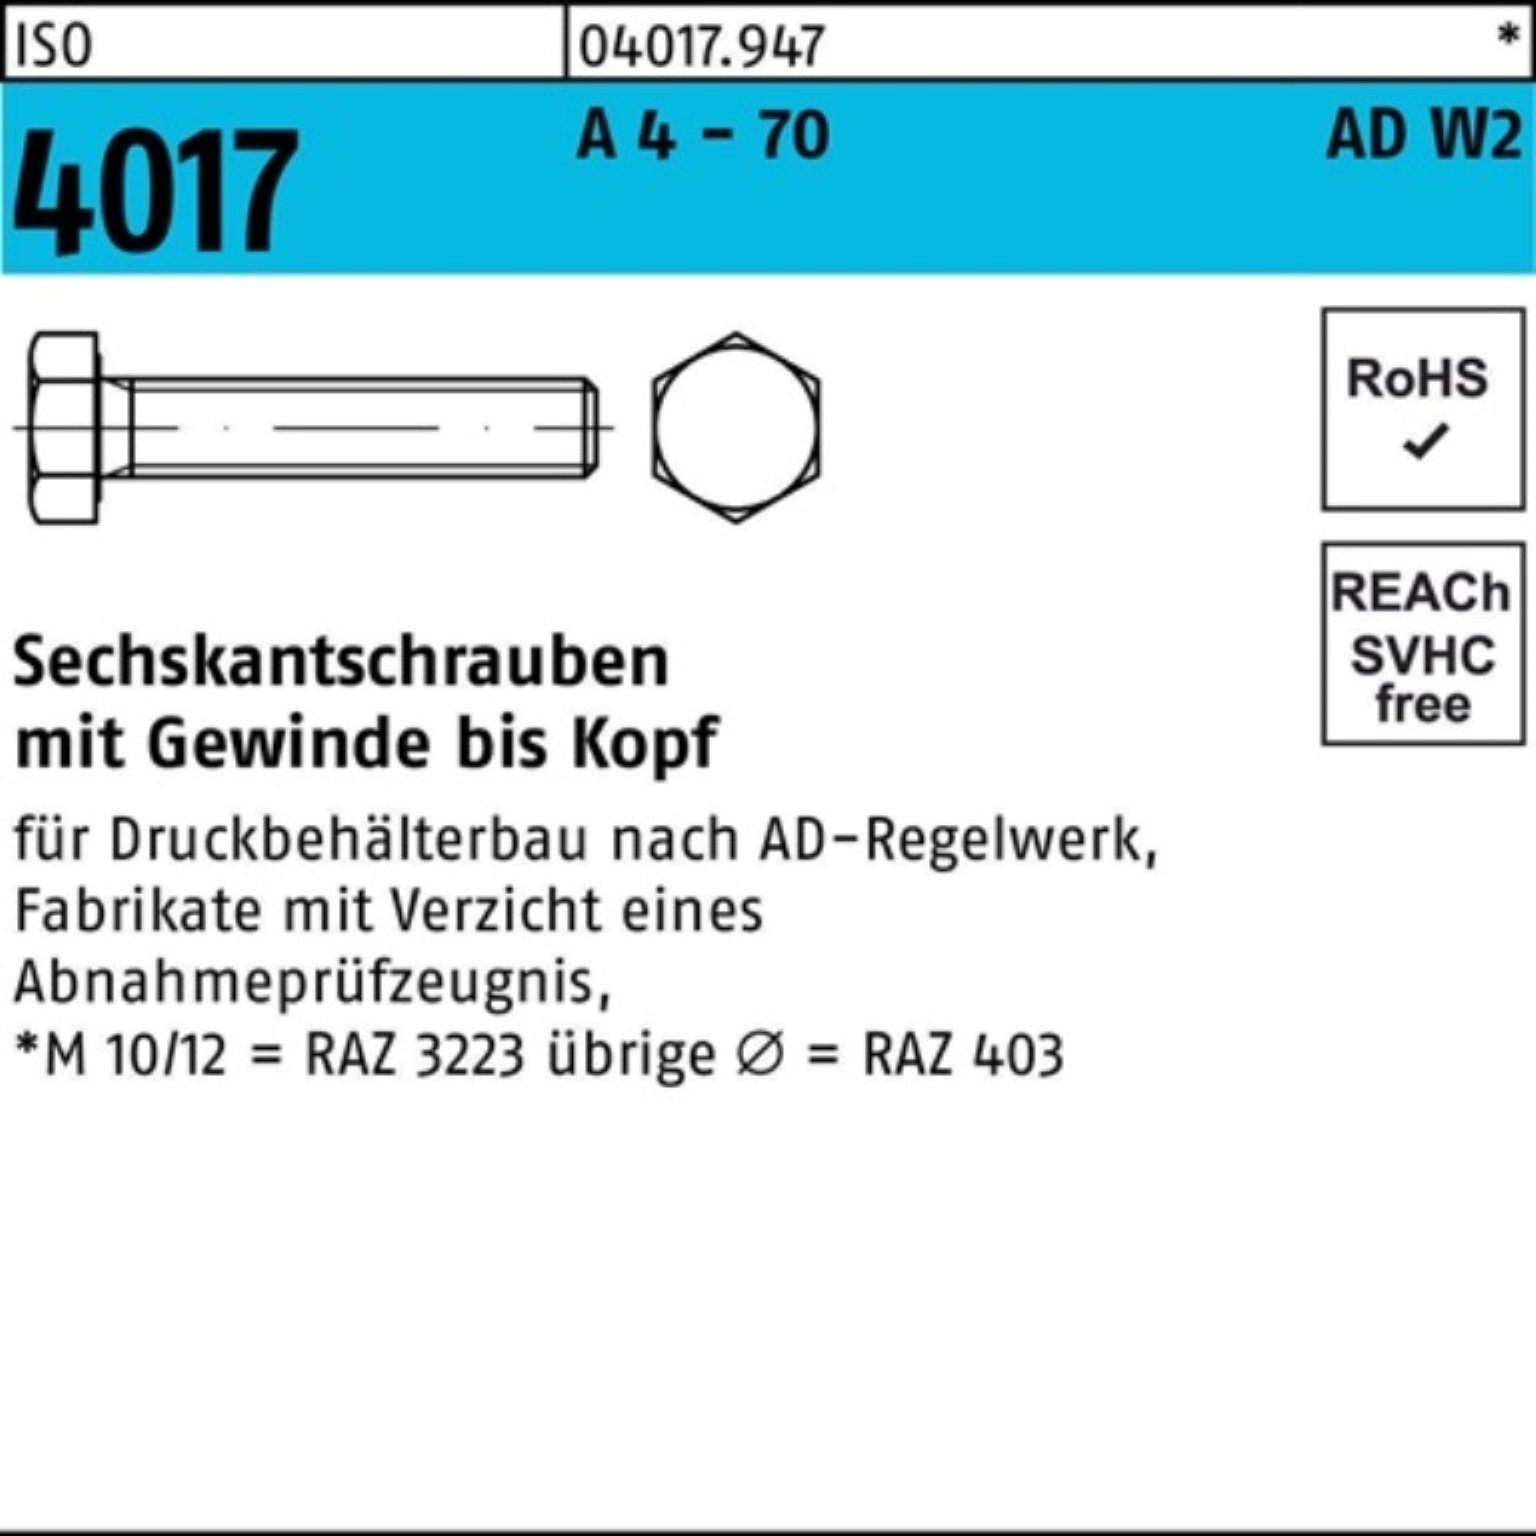 Bufab Sechskantschraube 100er Pack Sechskantschraube ISO 4017 VG M16x 80 A 4 - 70 AD-W2 25 St